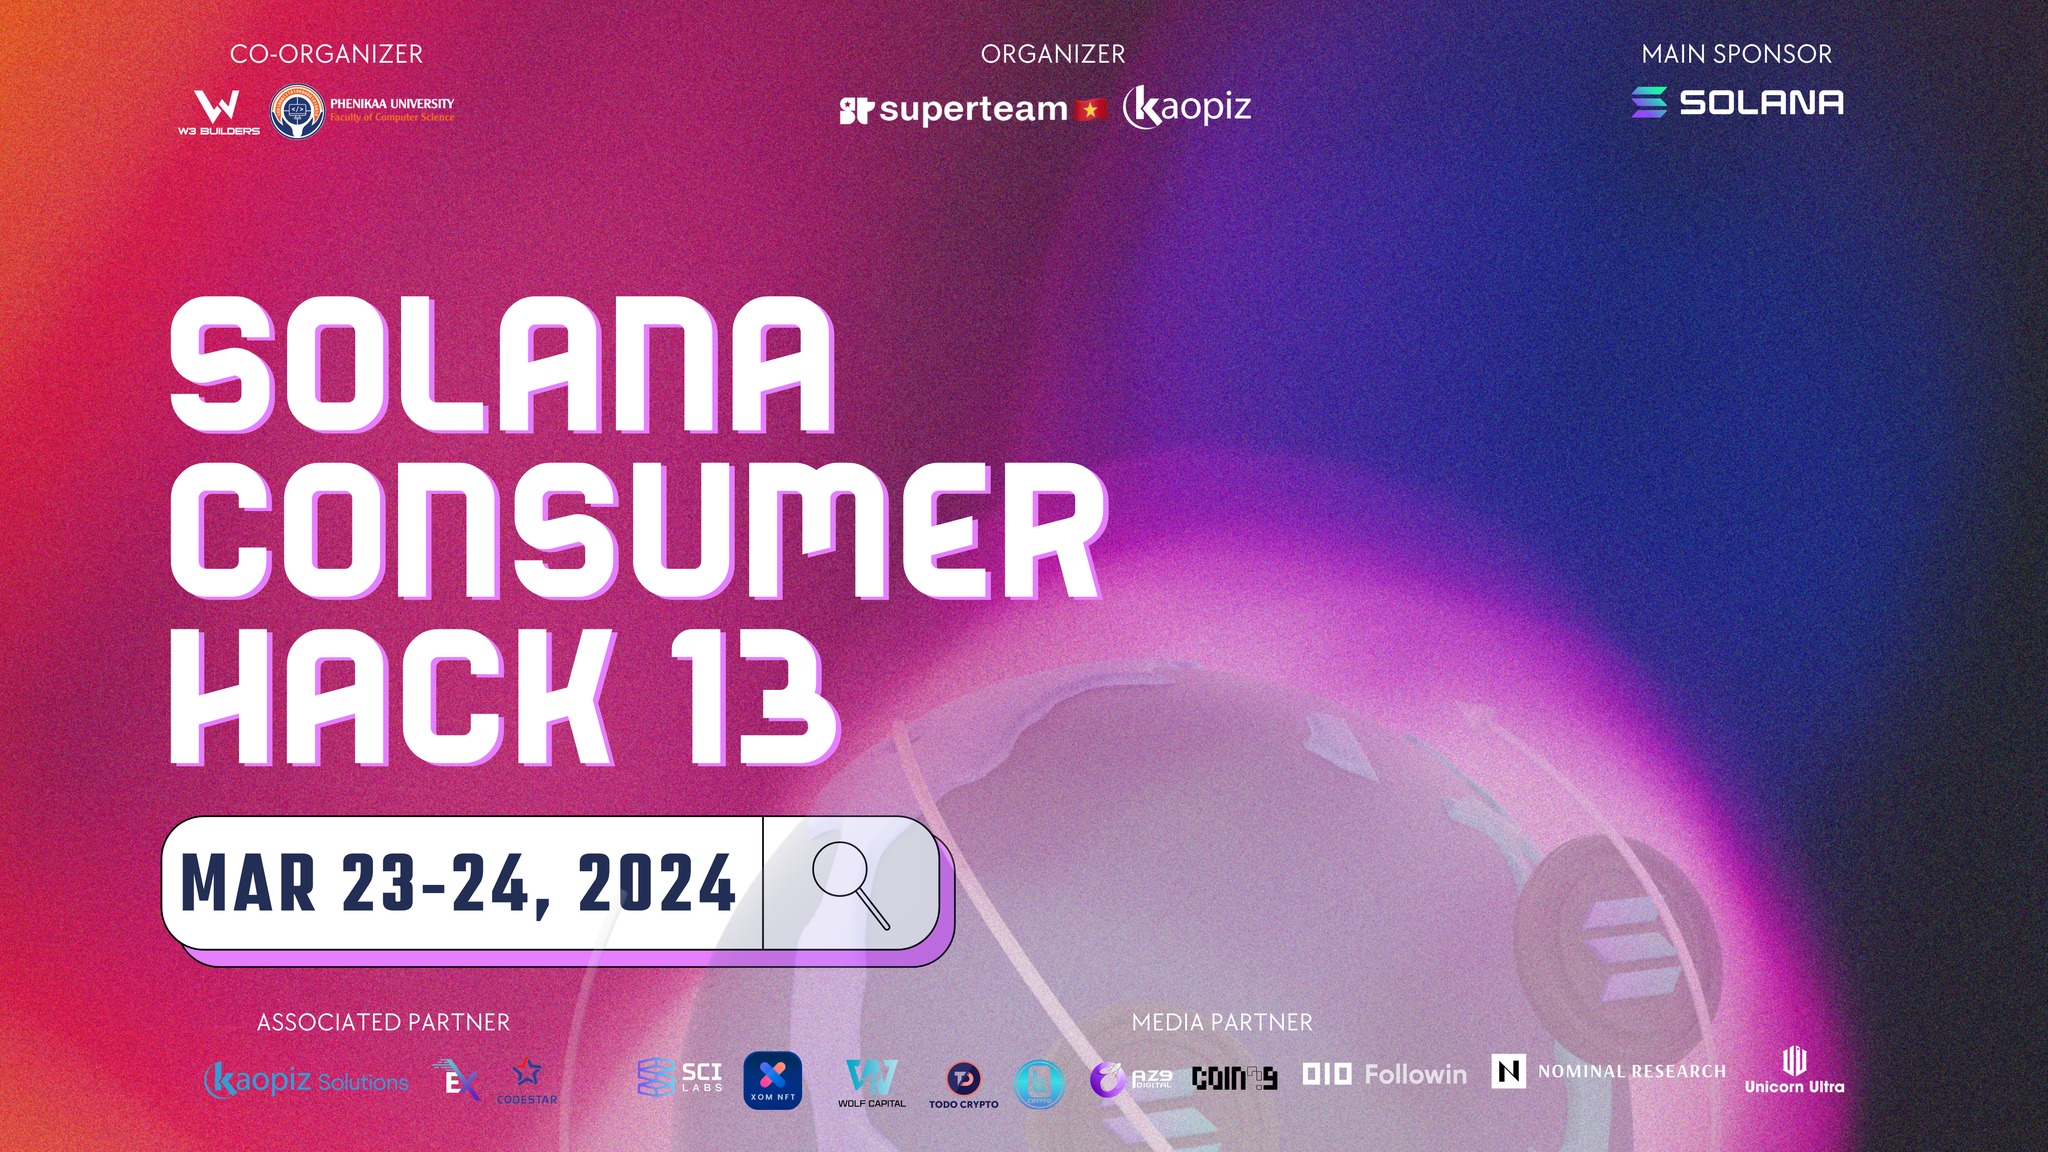  Solana Consumer Hack 13